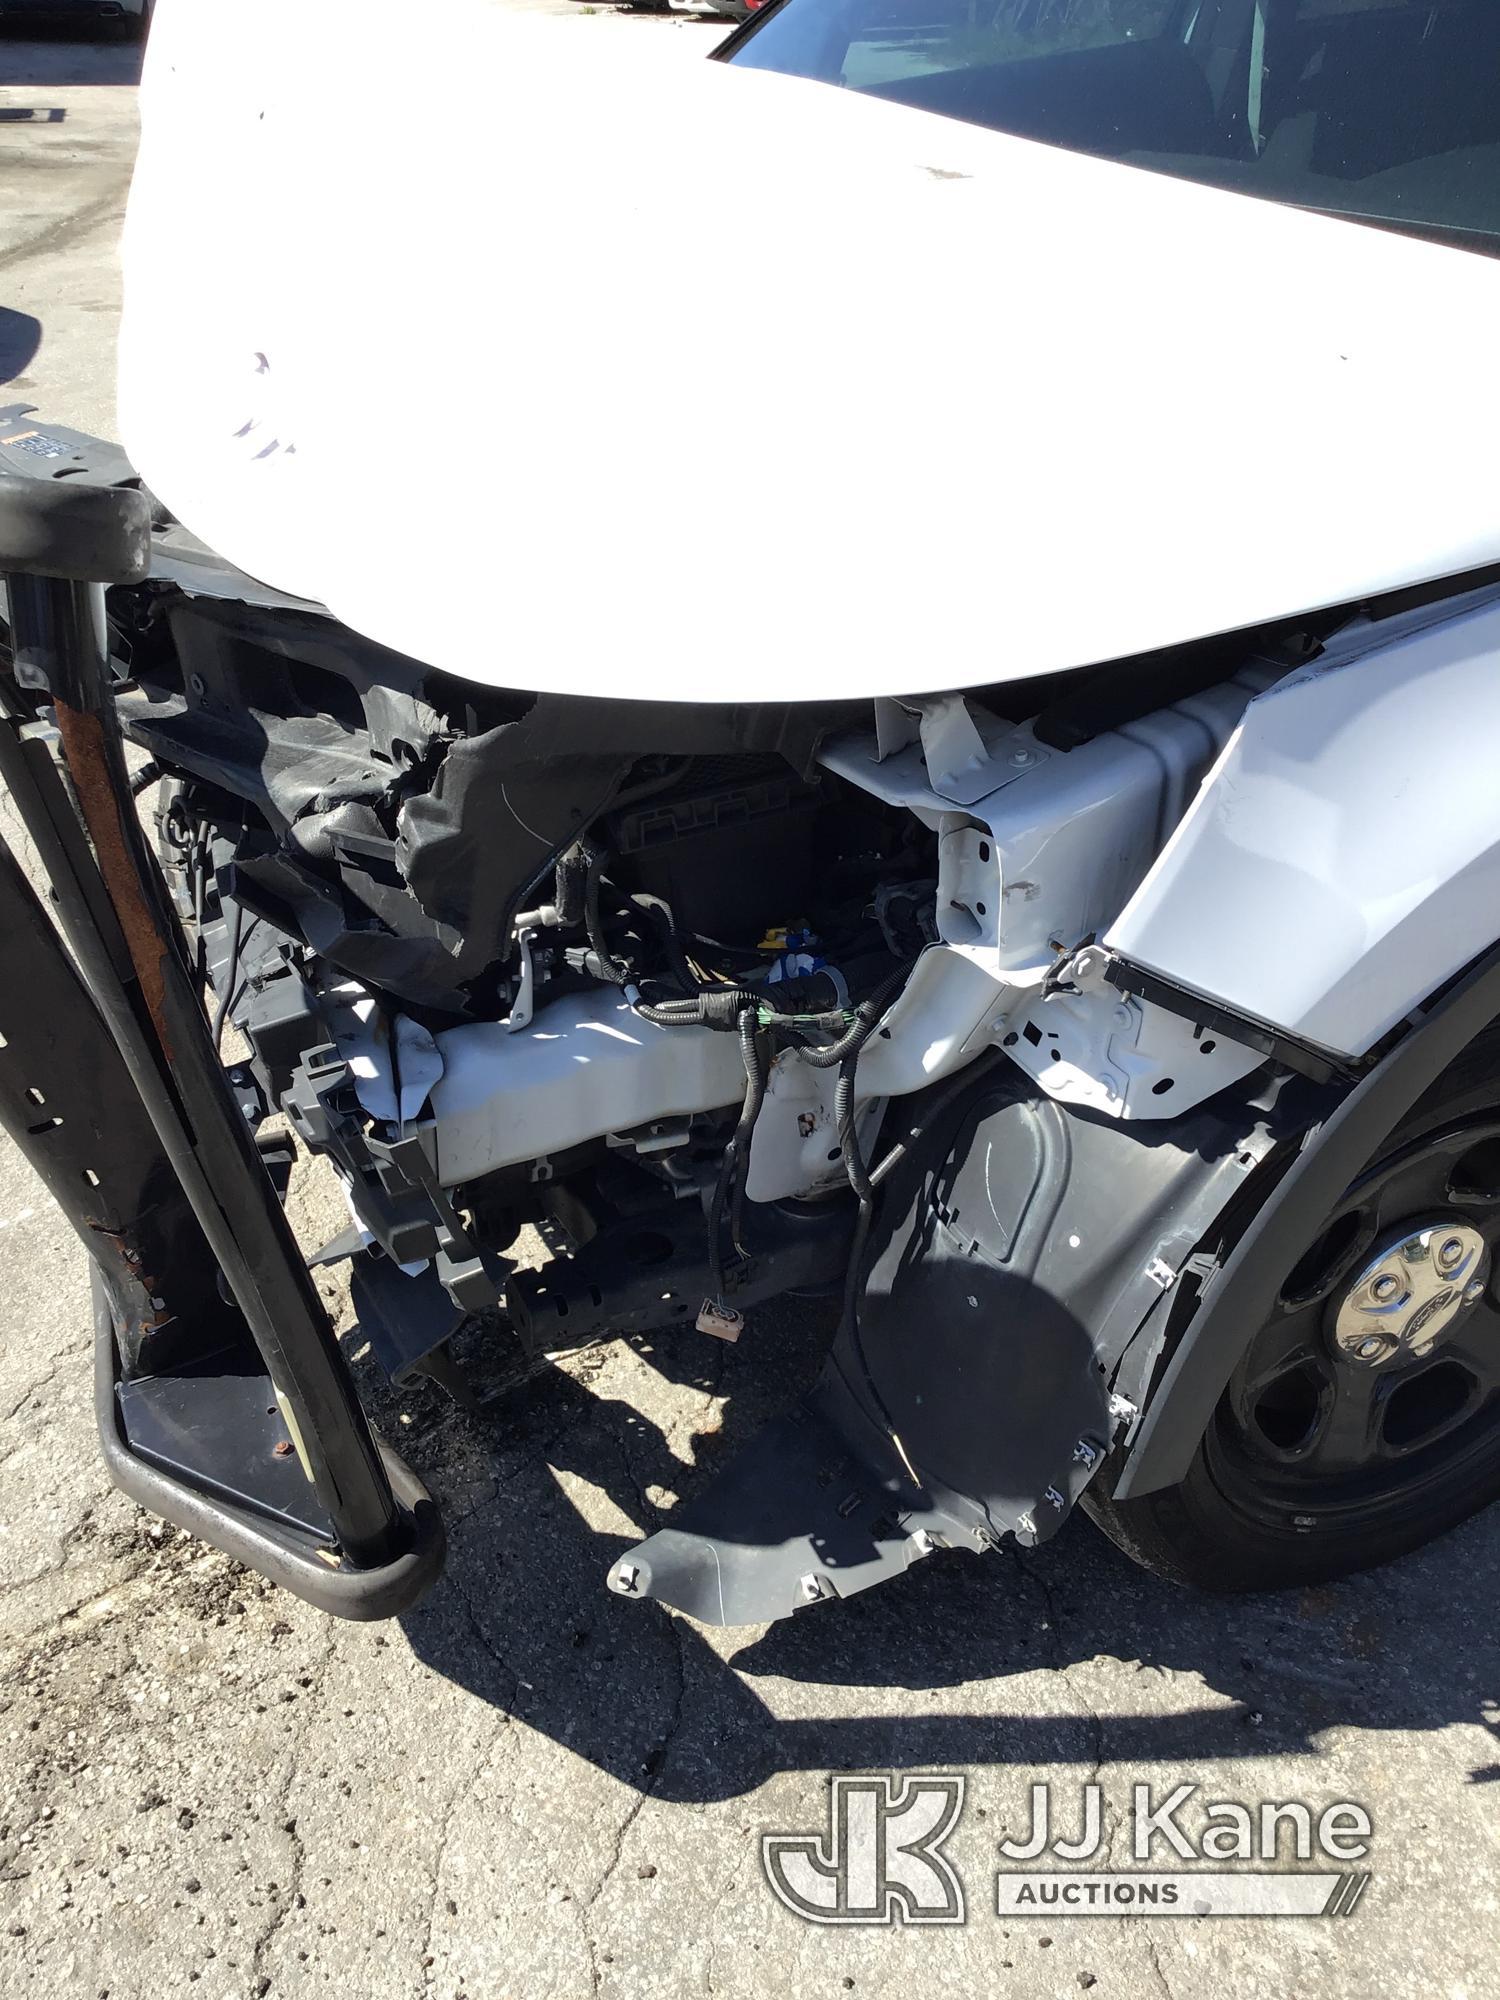 (Ocala, FL) 2017 Ford Explorer 4x4 4-Door Sport Utility Vehicle CERTICIATE OF DESTRUCTION ONLY   Doe